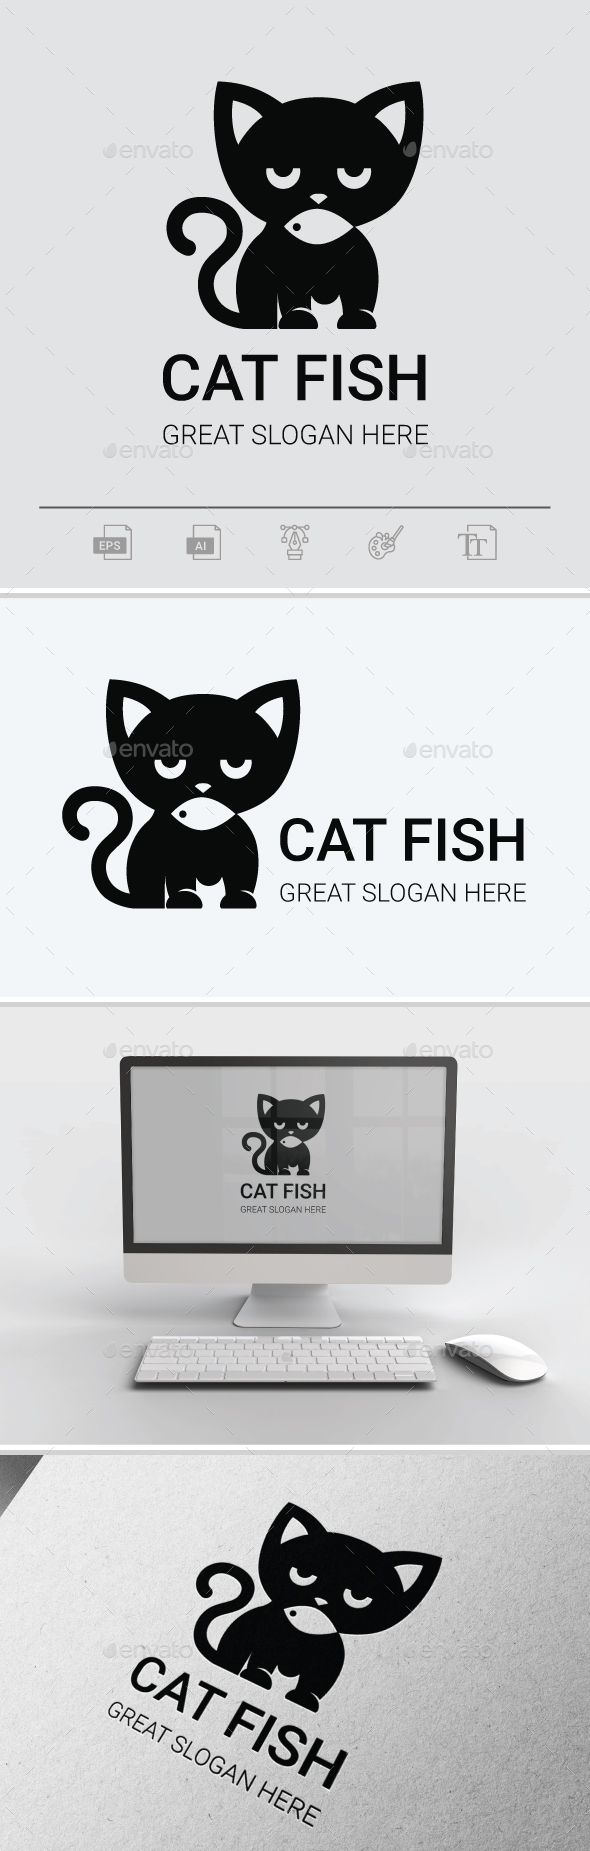 cat fish logo